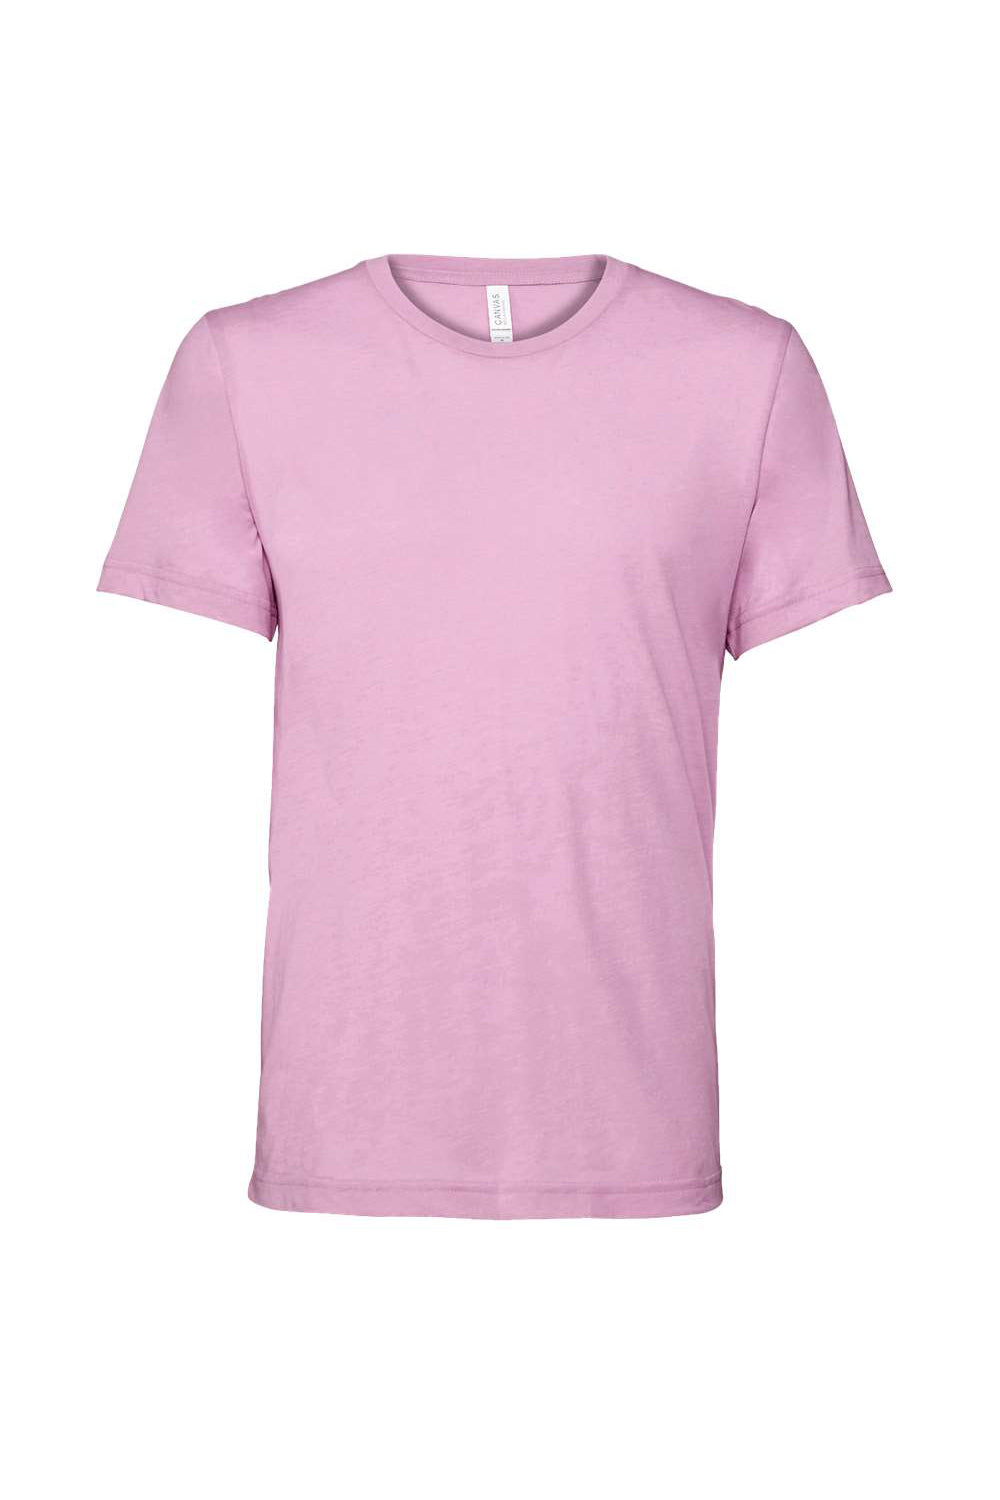 Bella + Canvas BC3413/3413C/3413 Mens Short Sleeve Crewneck T-Shirt Lilac Pink Flat Front